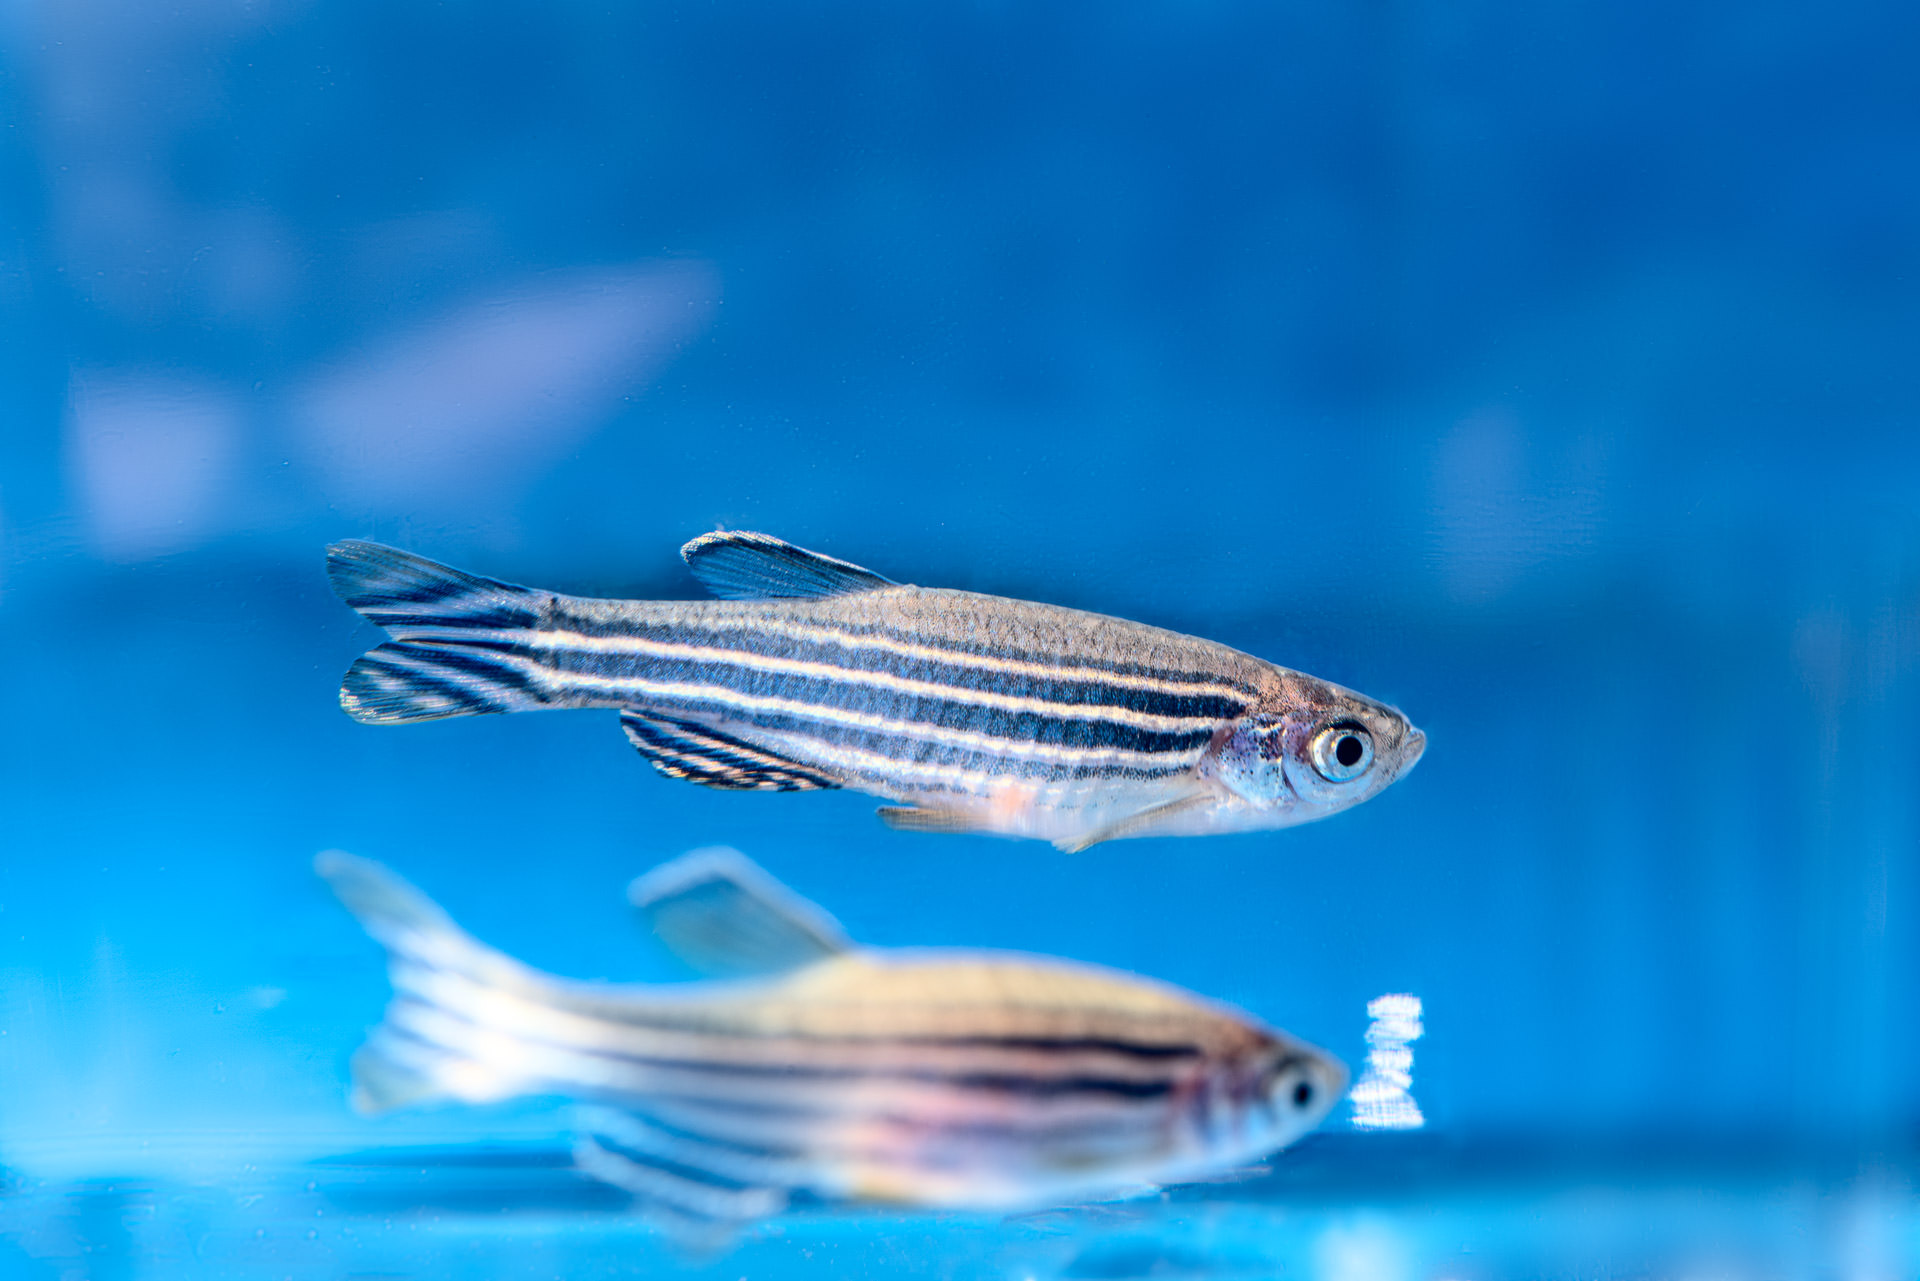 Zebrafish (Danio rerio) a common model organism in research - photographer Philippe Wiget